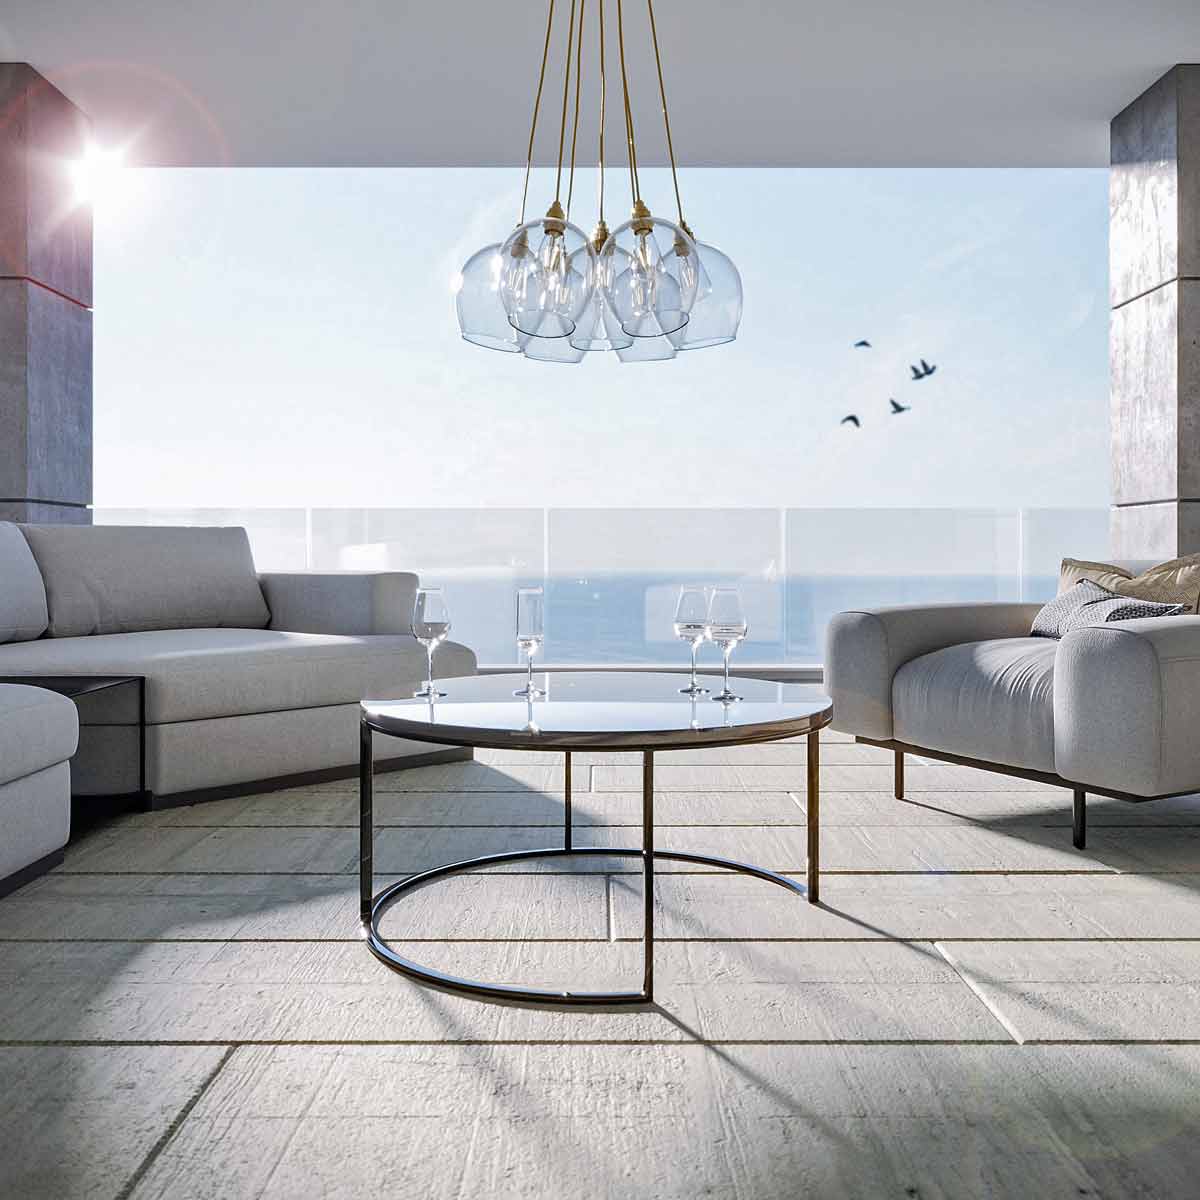 Designer pendant lighting cluster in a living area